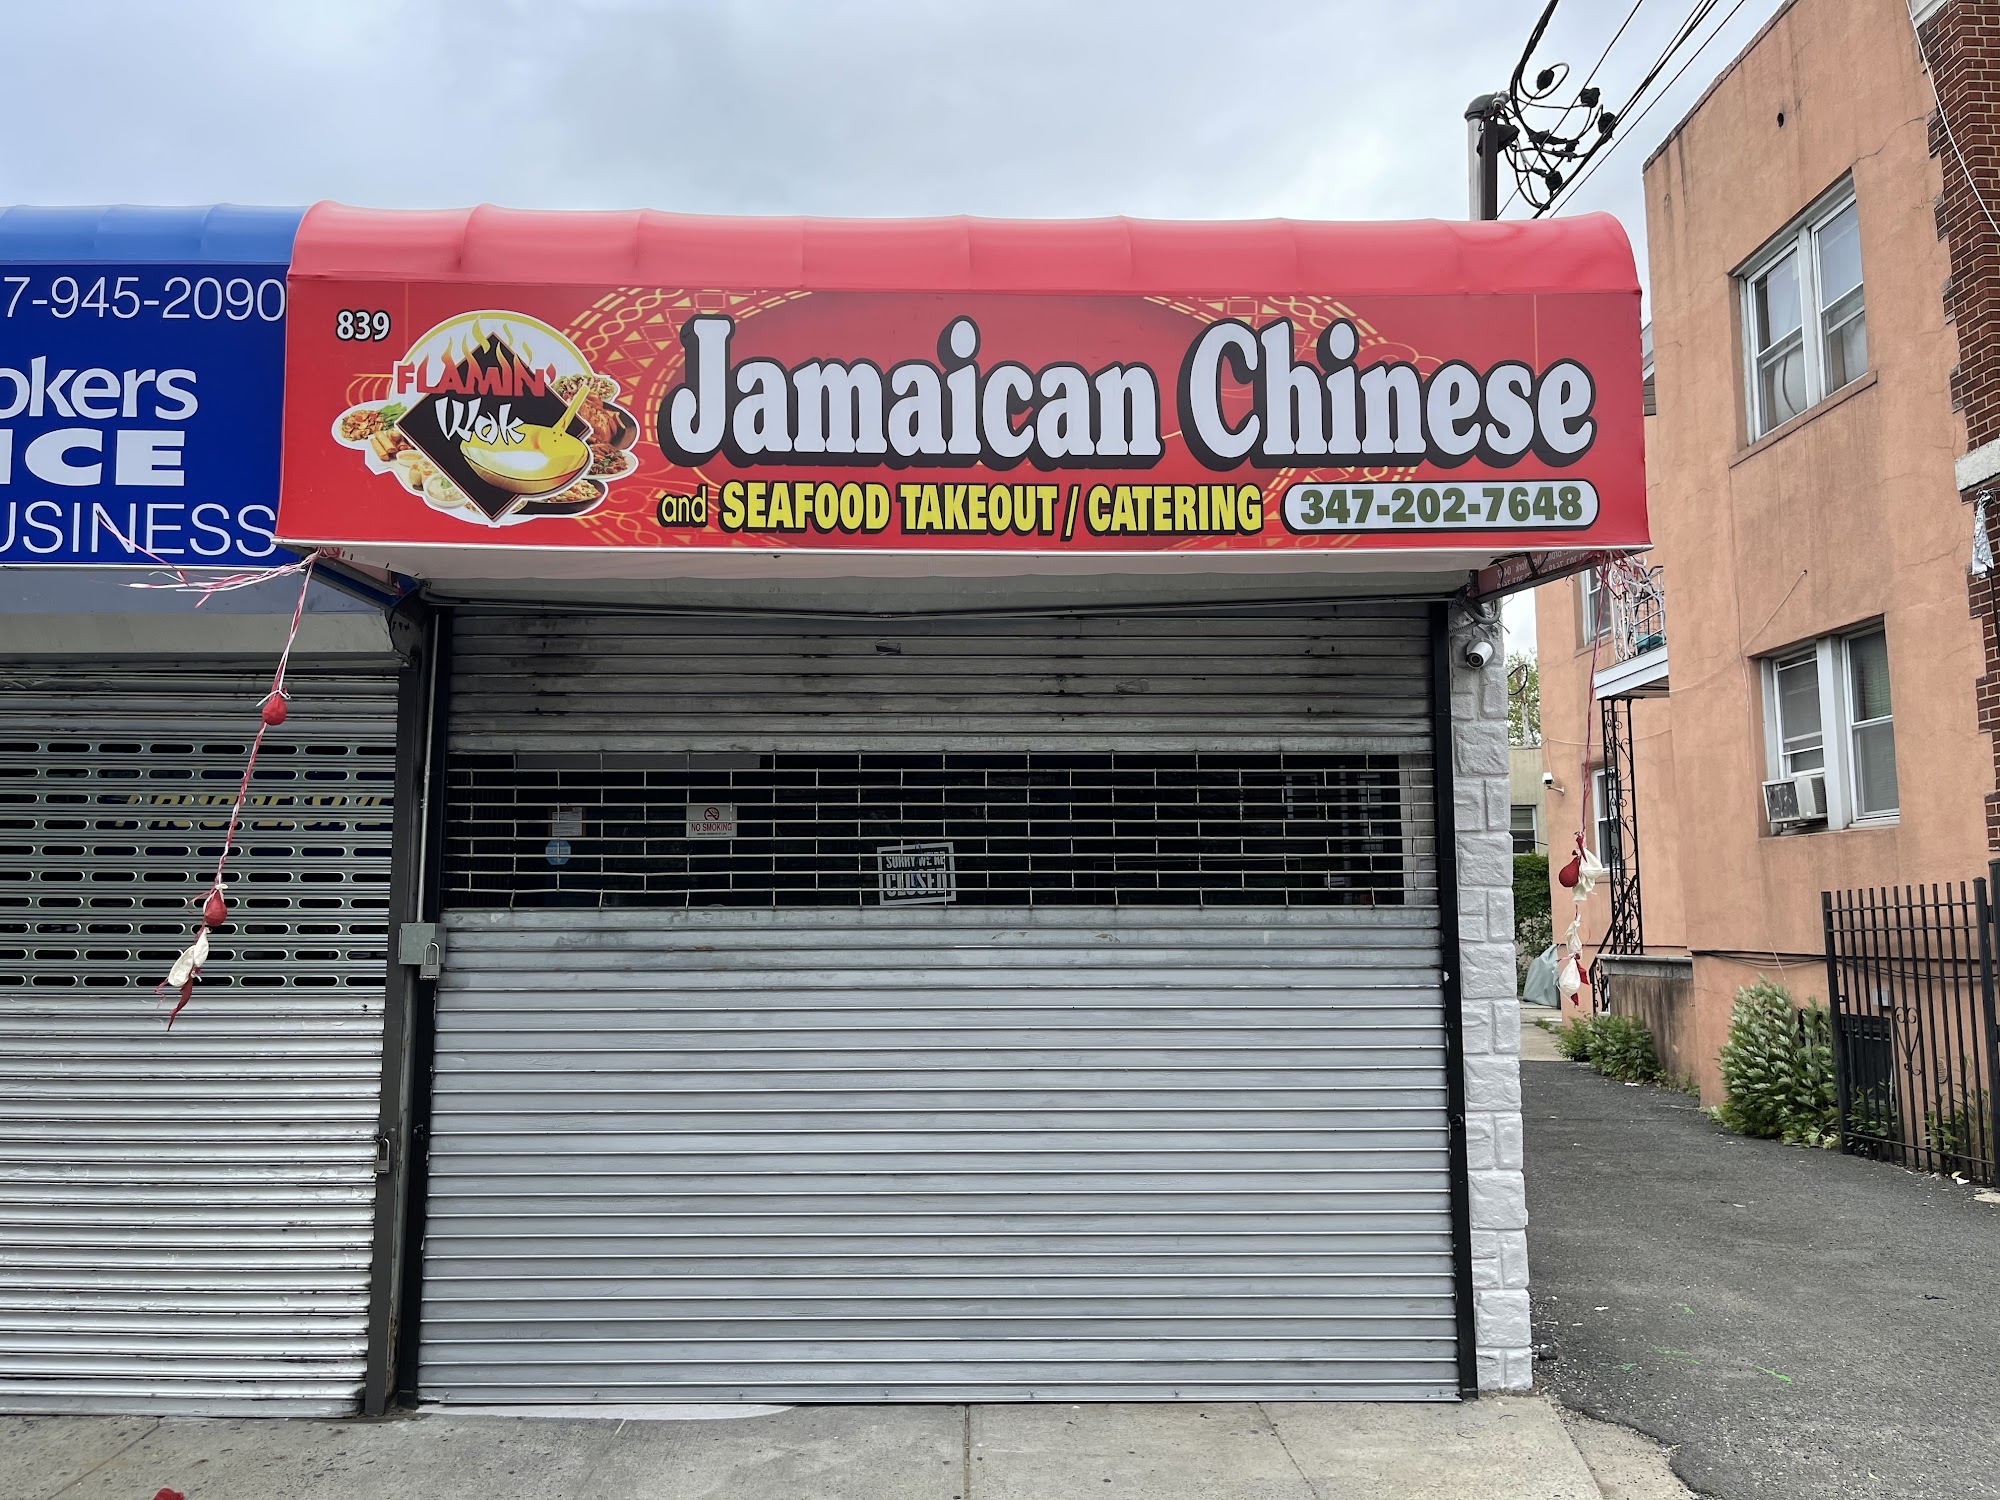 Flamin wok Jamaican Chinese & seafood